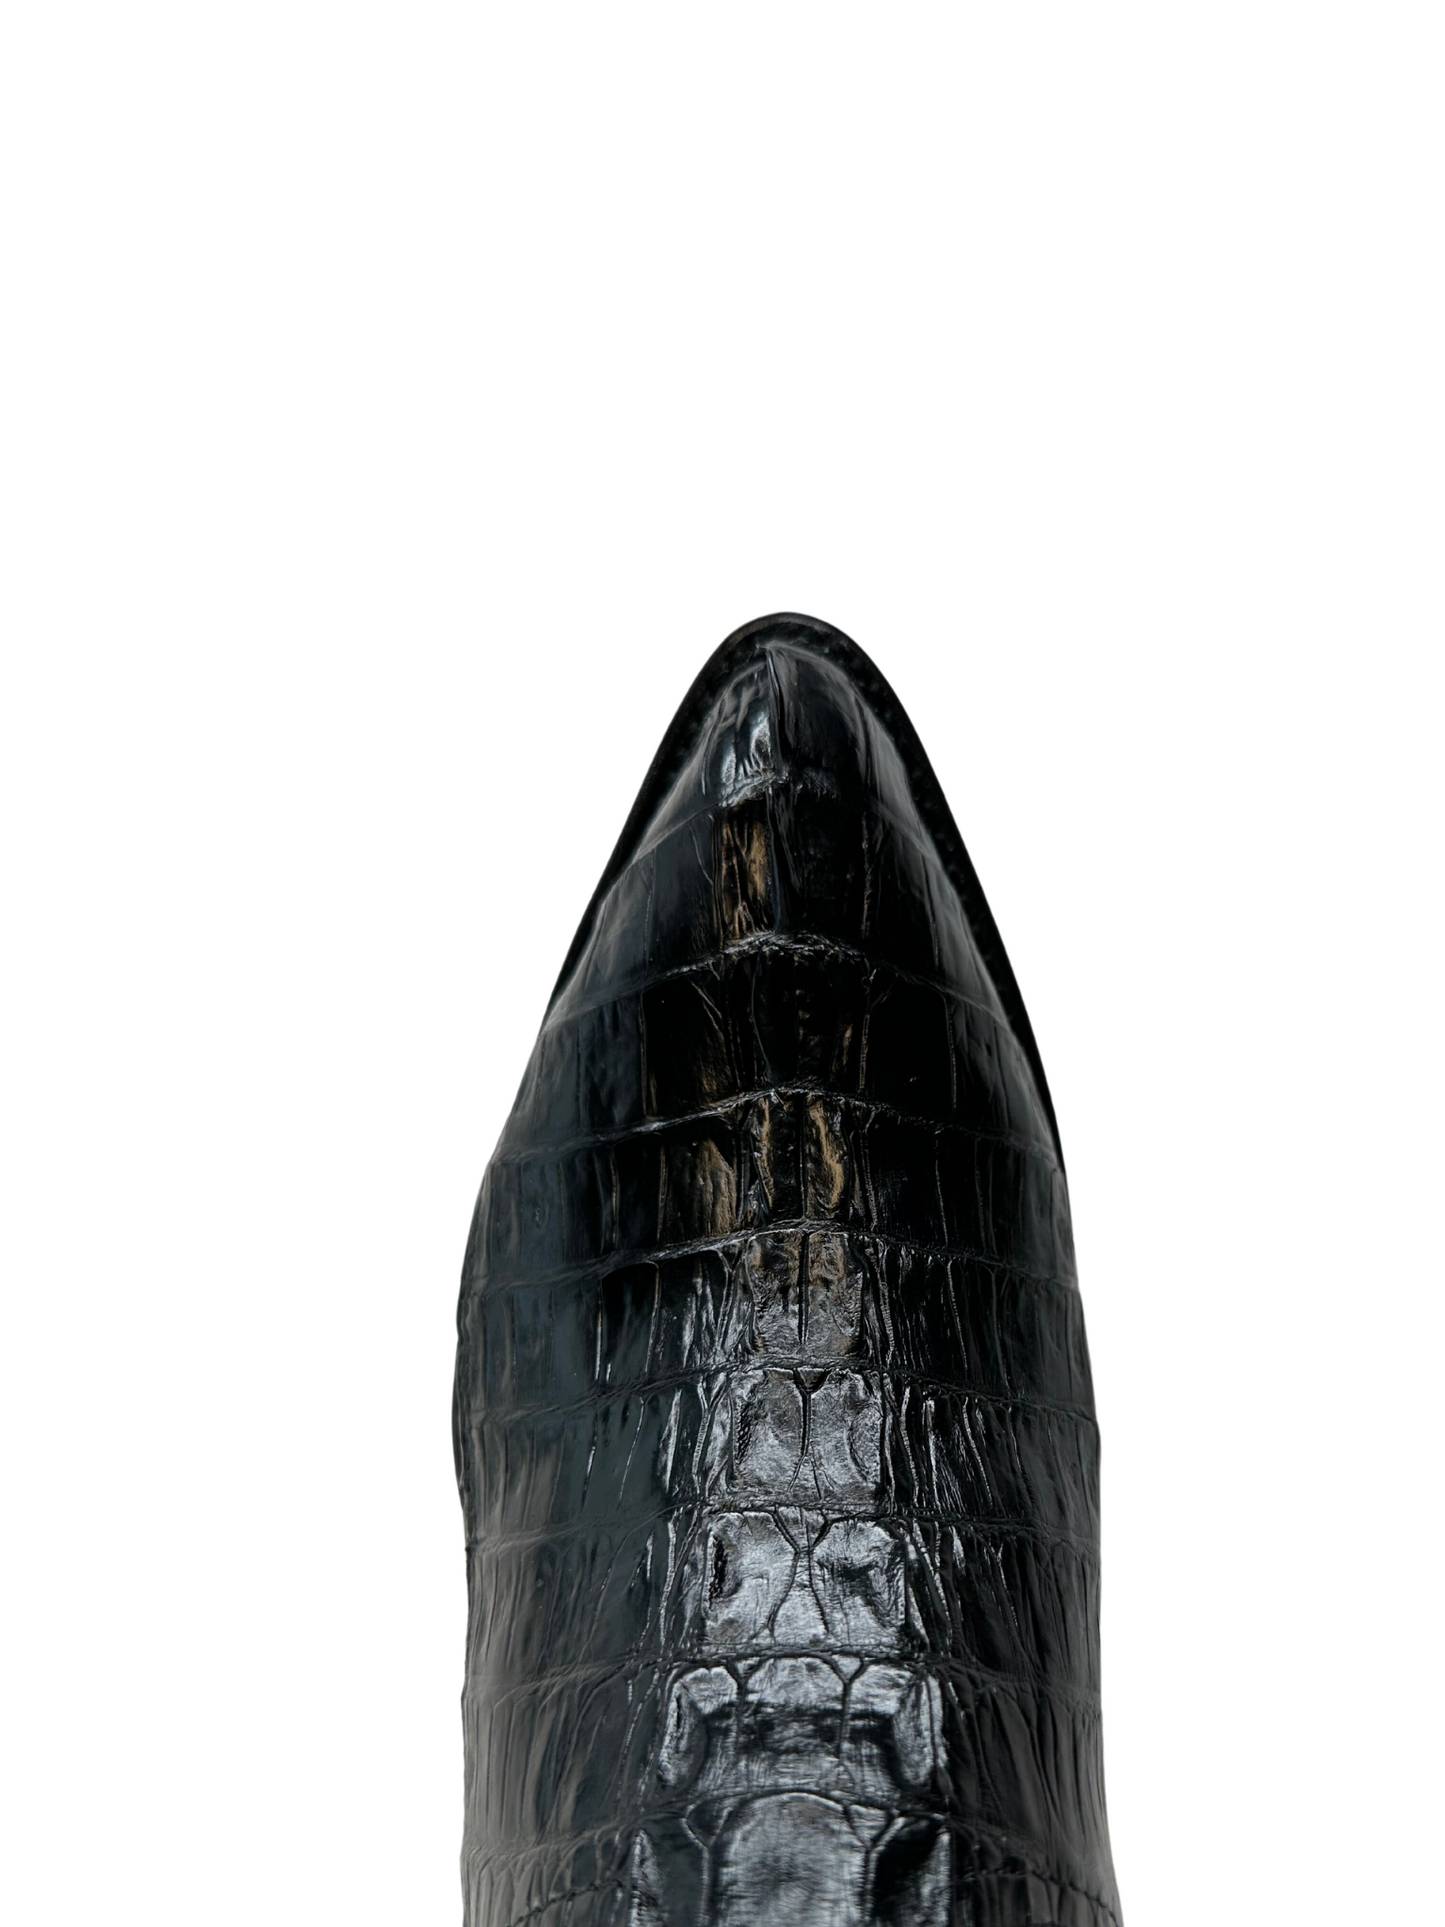 Los Altos Black Genuine Caiman Tail J Toe Boot